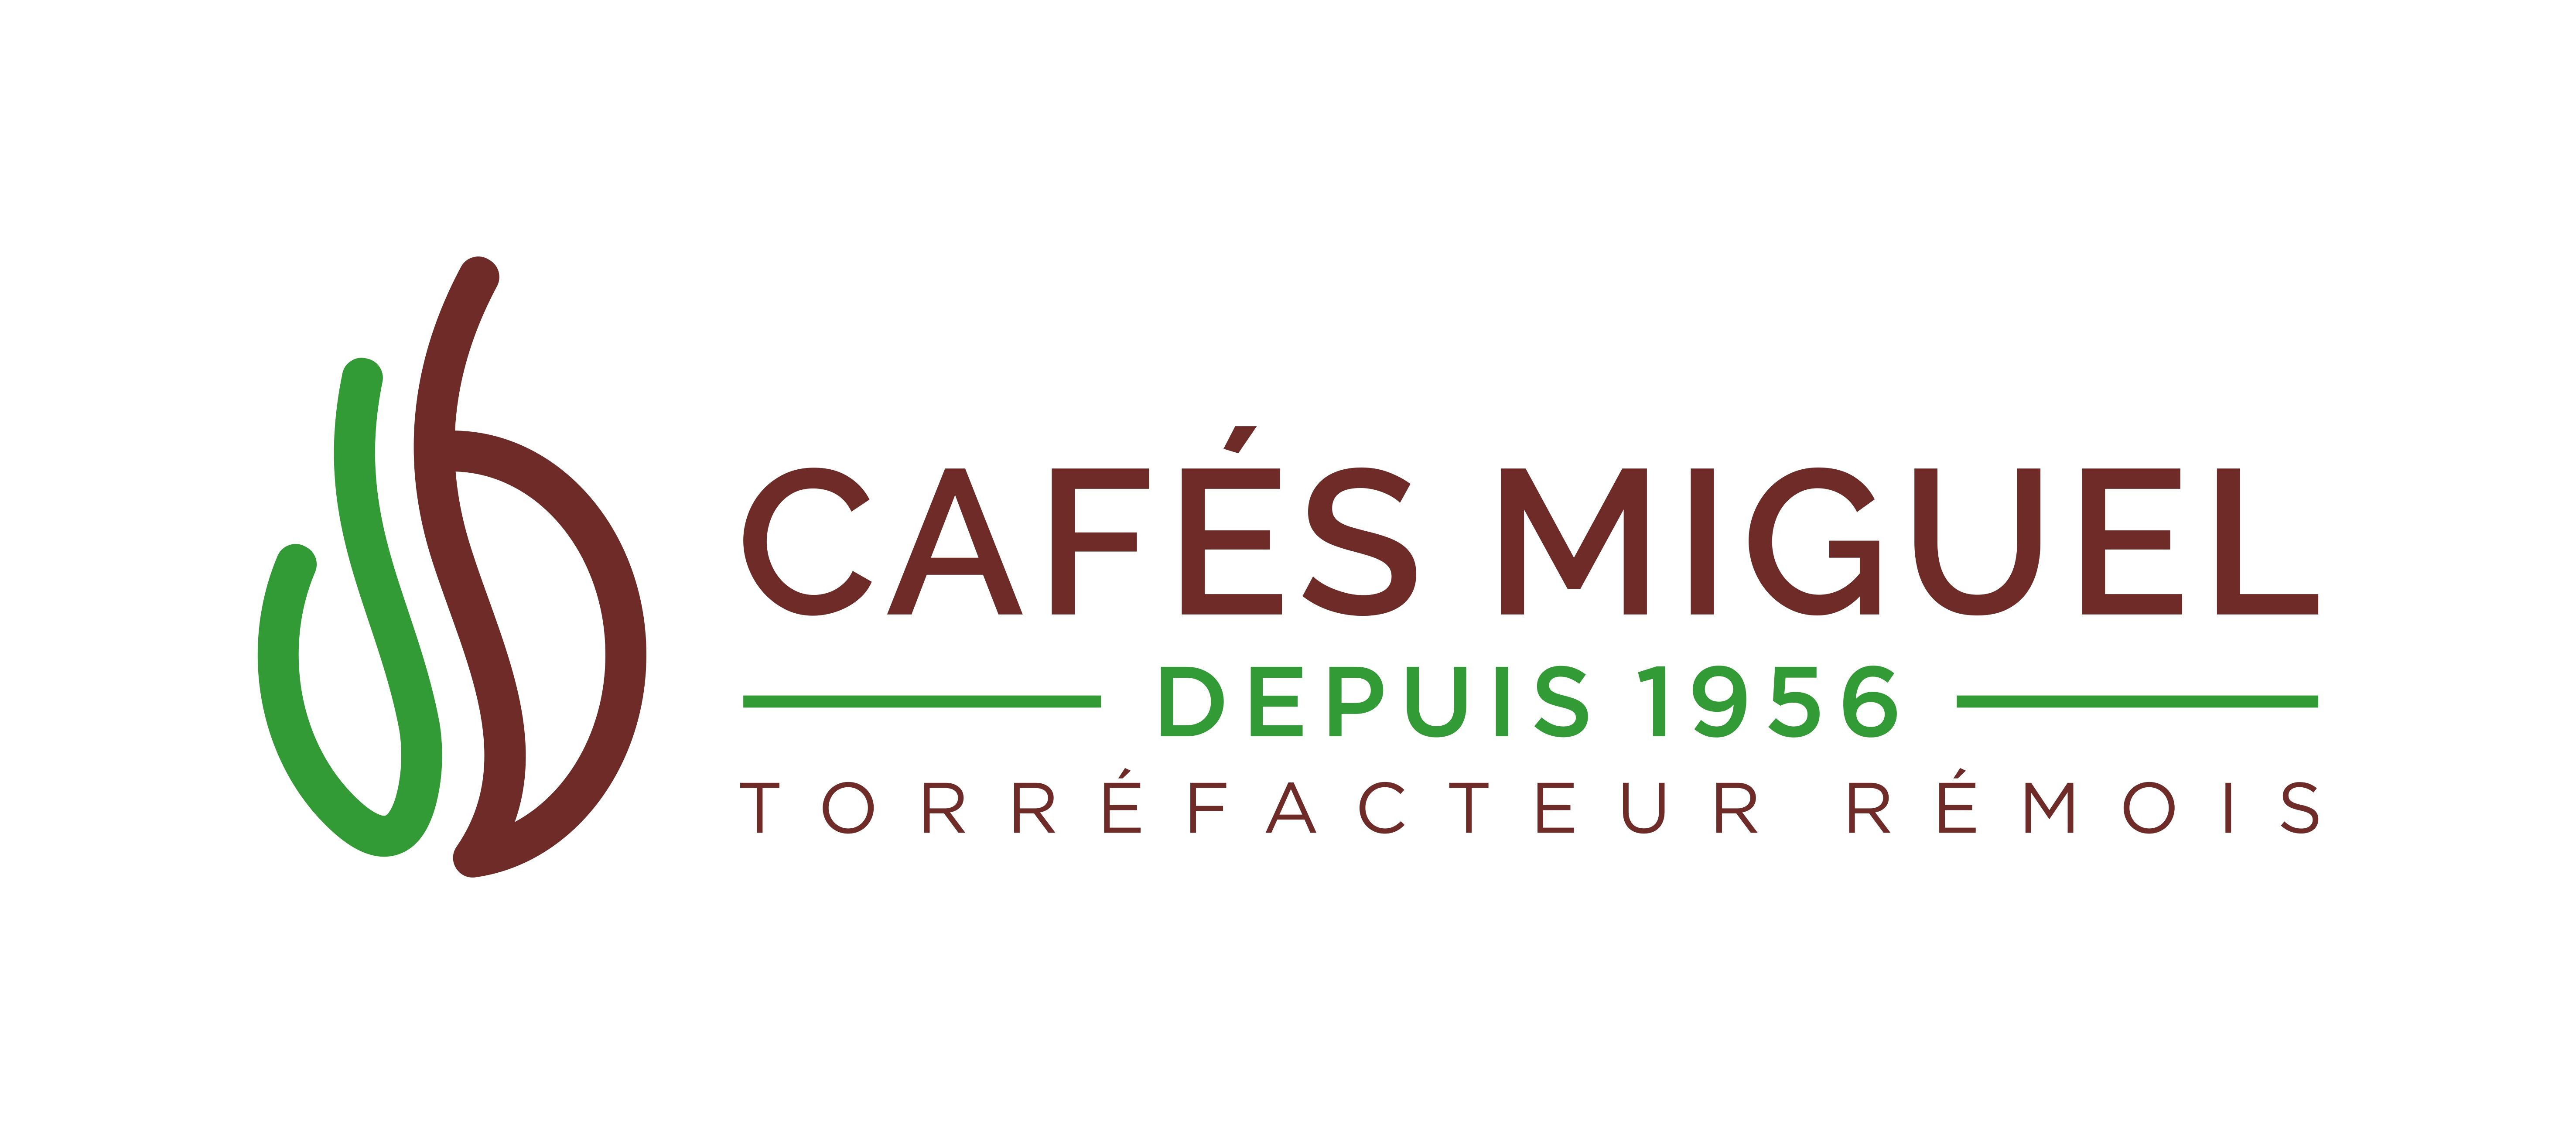 Cafés Miguel